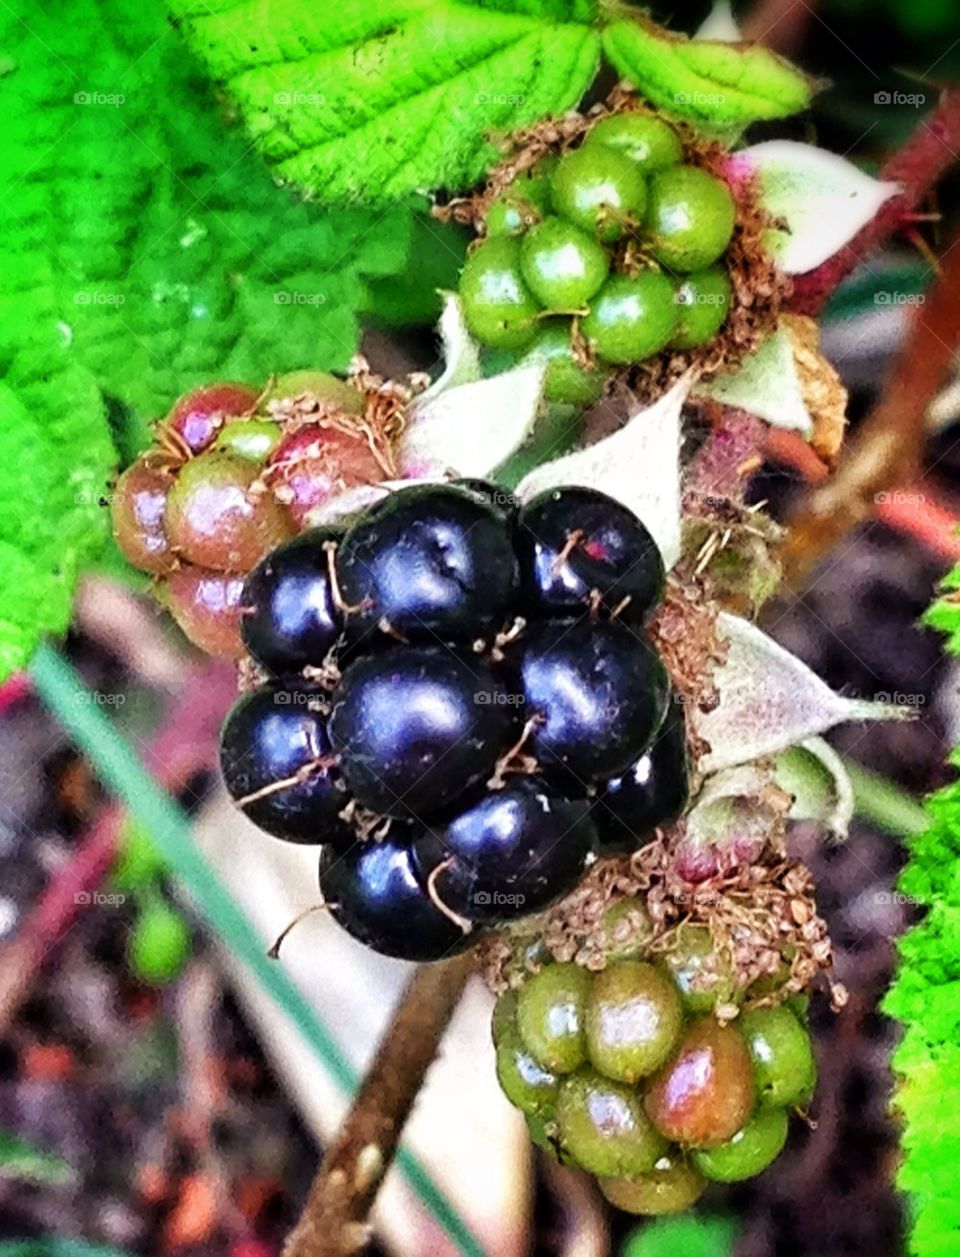 Garden blackberry discovery!